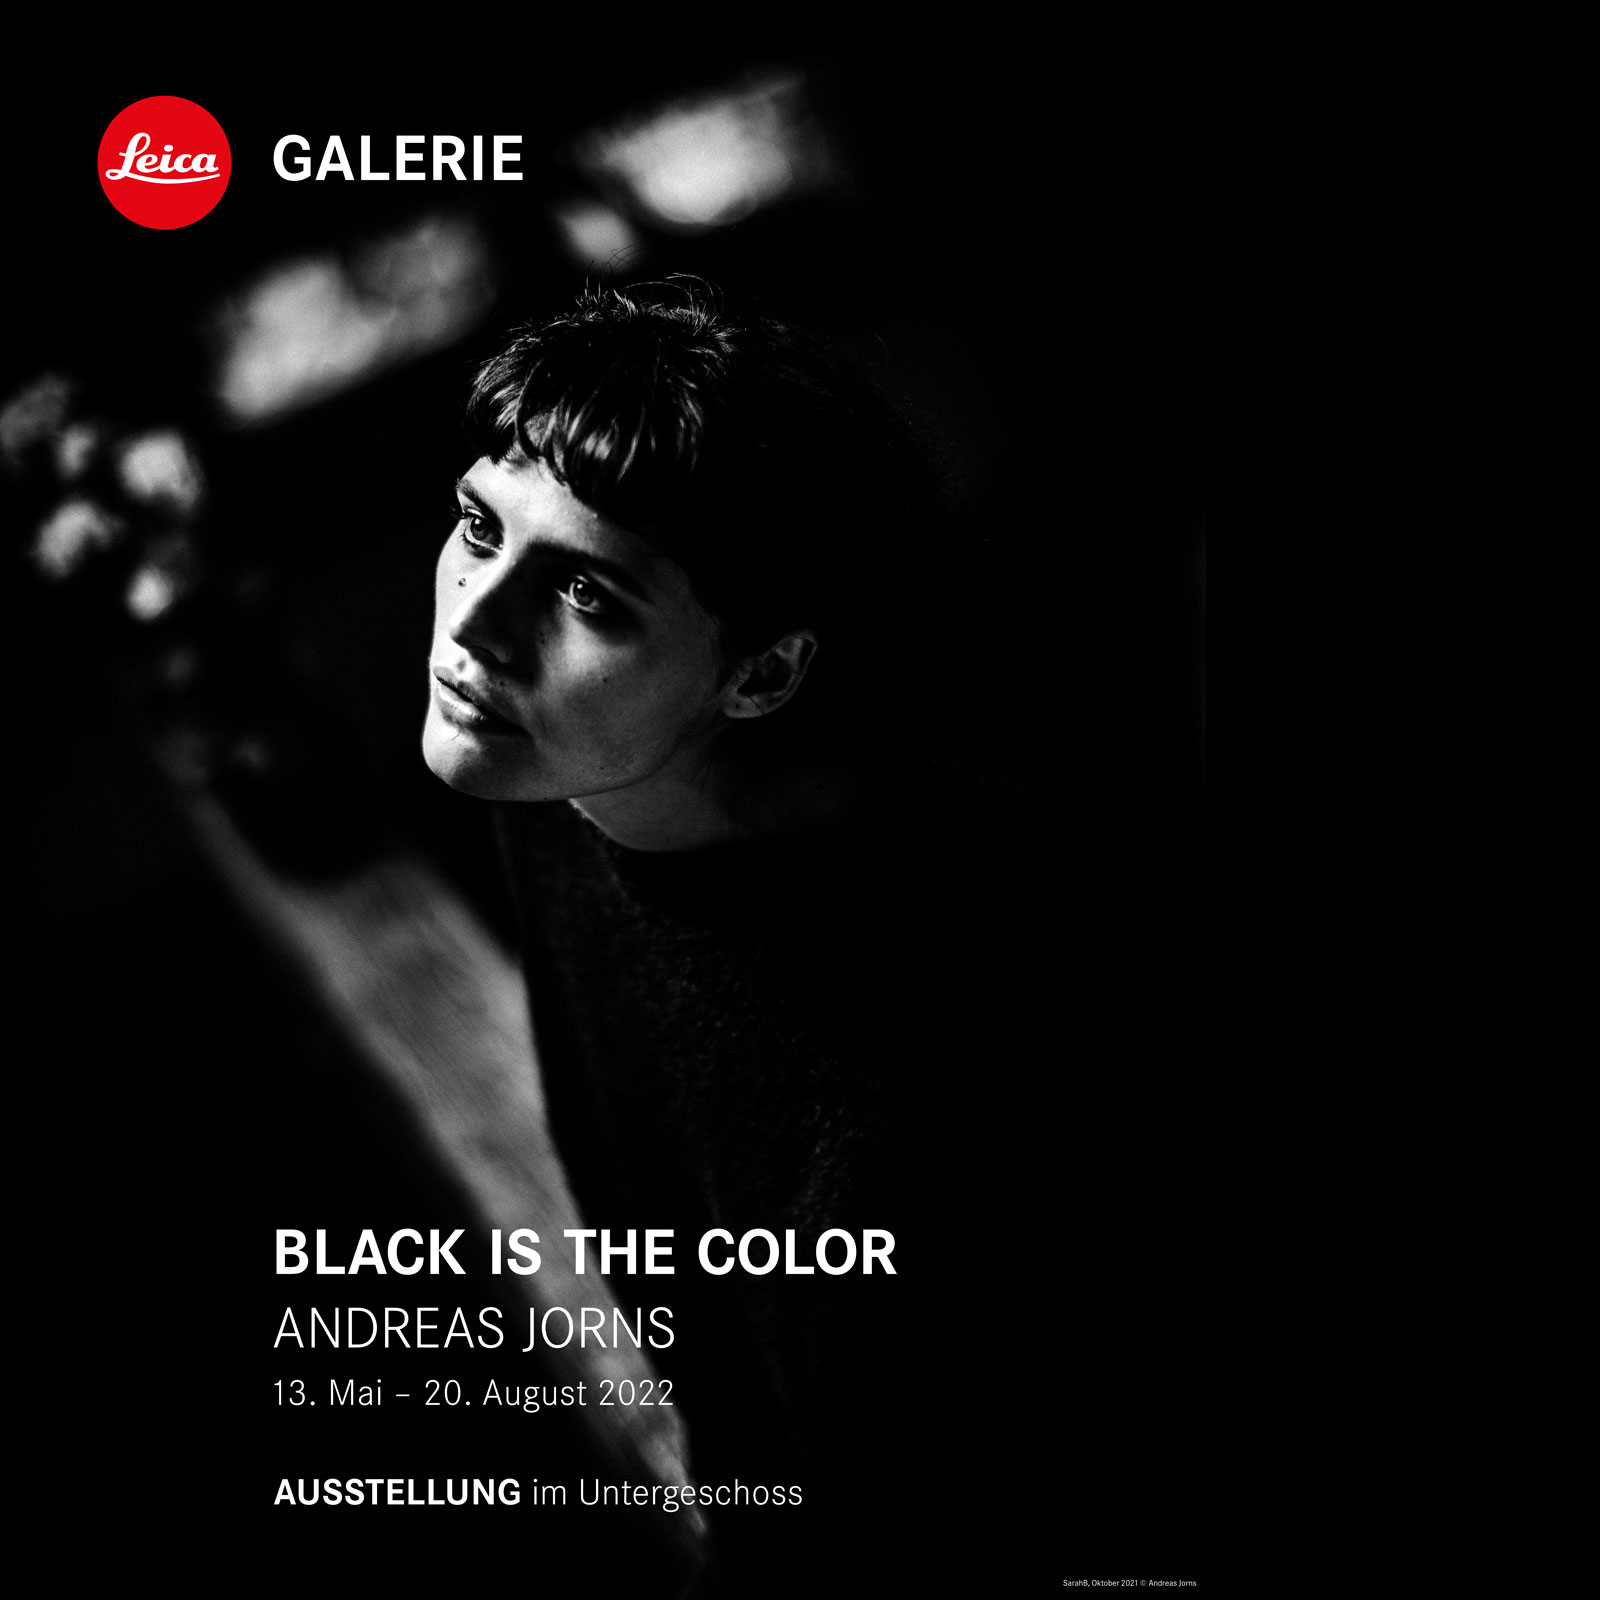 Leica Galerie Düsseldorf - Ausstellung Andreas Jorns - Black is the Color